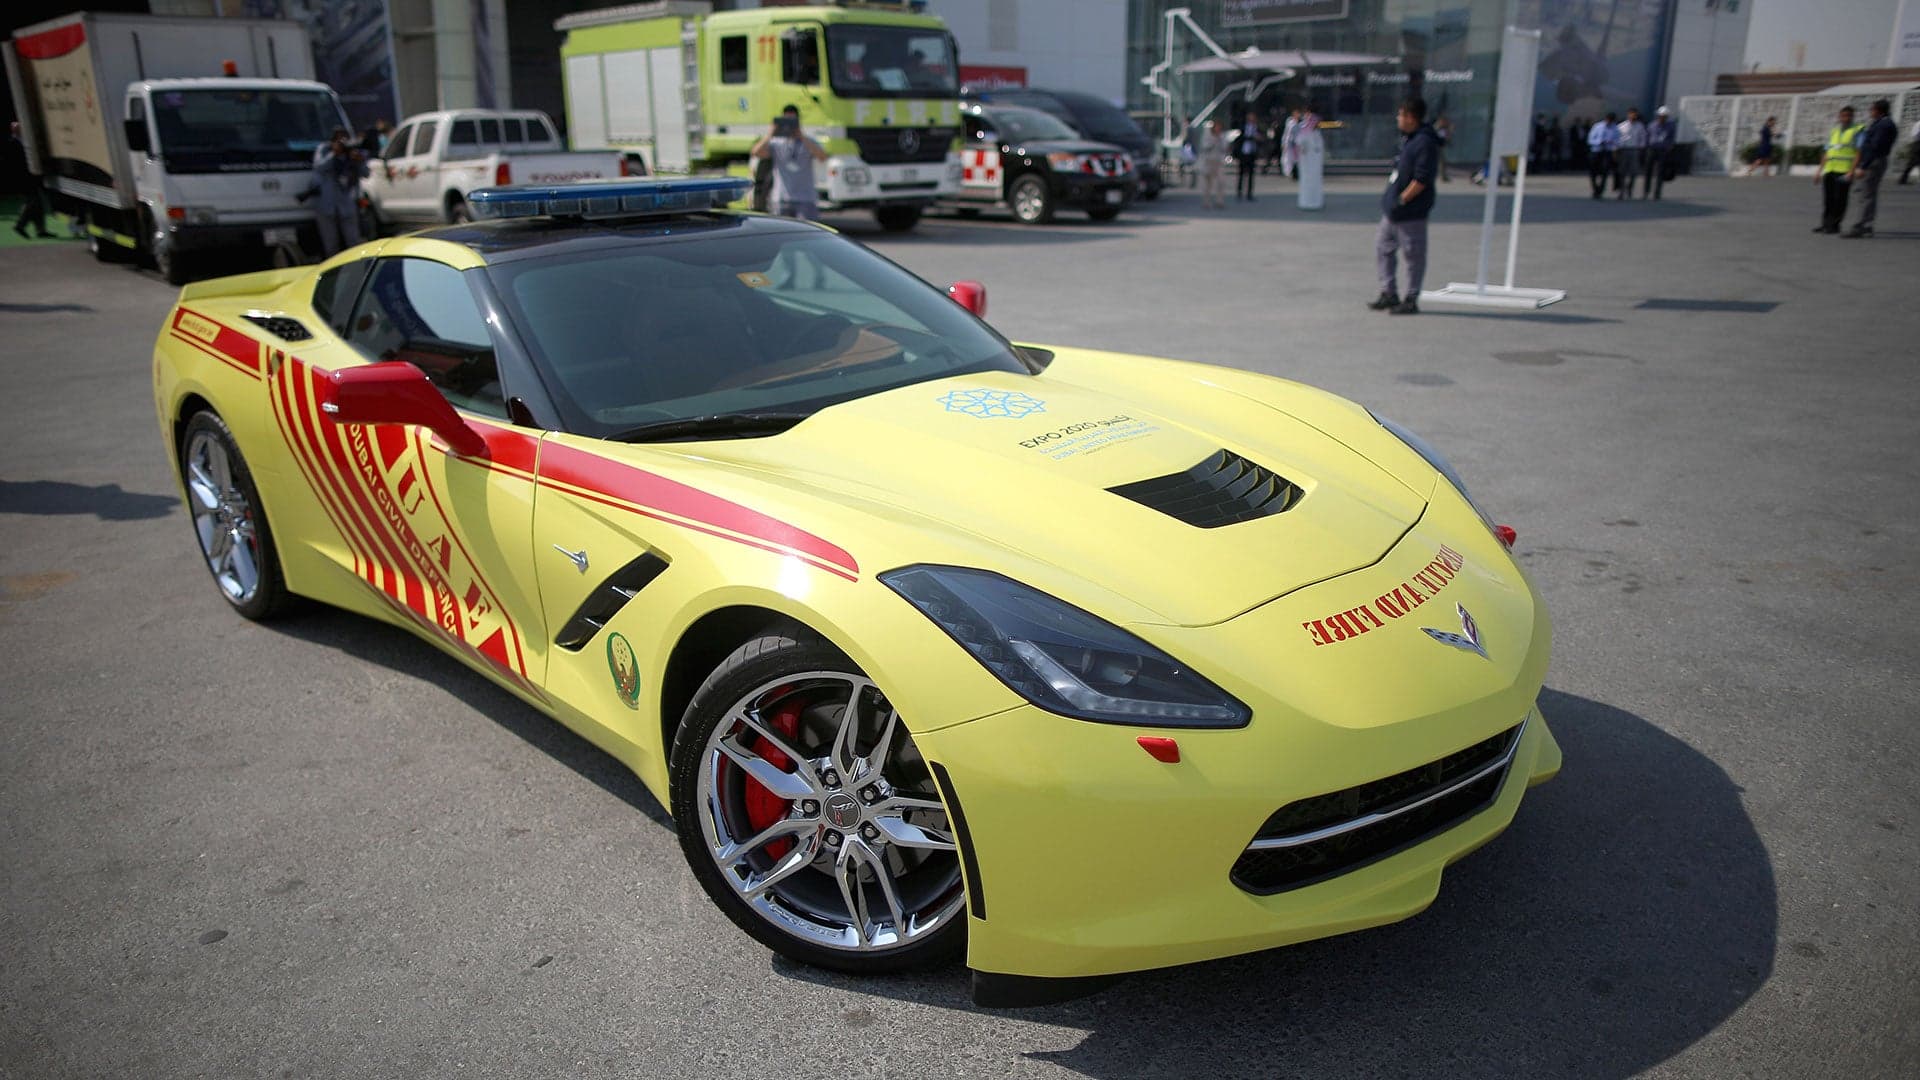 Dubai Fire Department Claims Its Chevy Corvettes Are “Trucks”